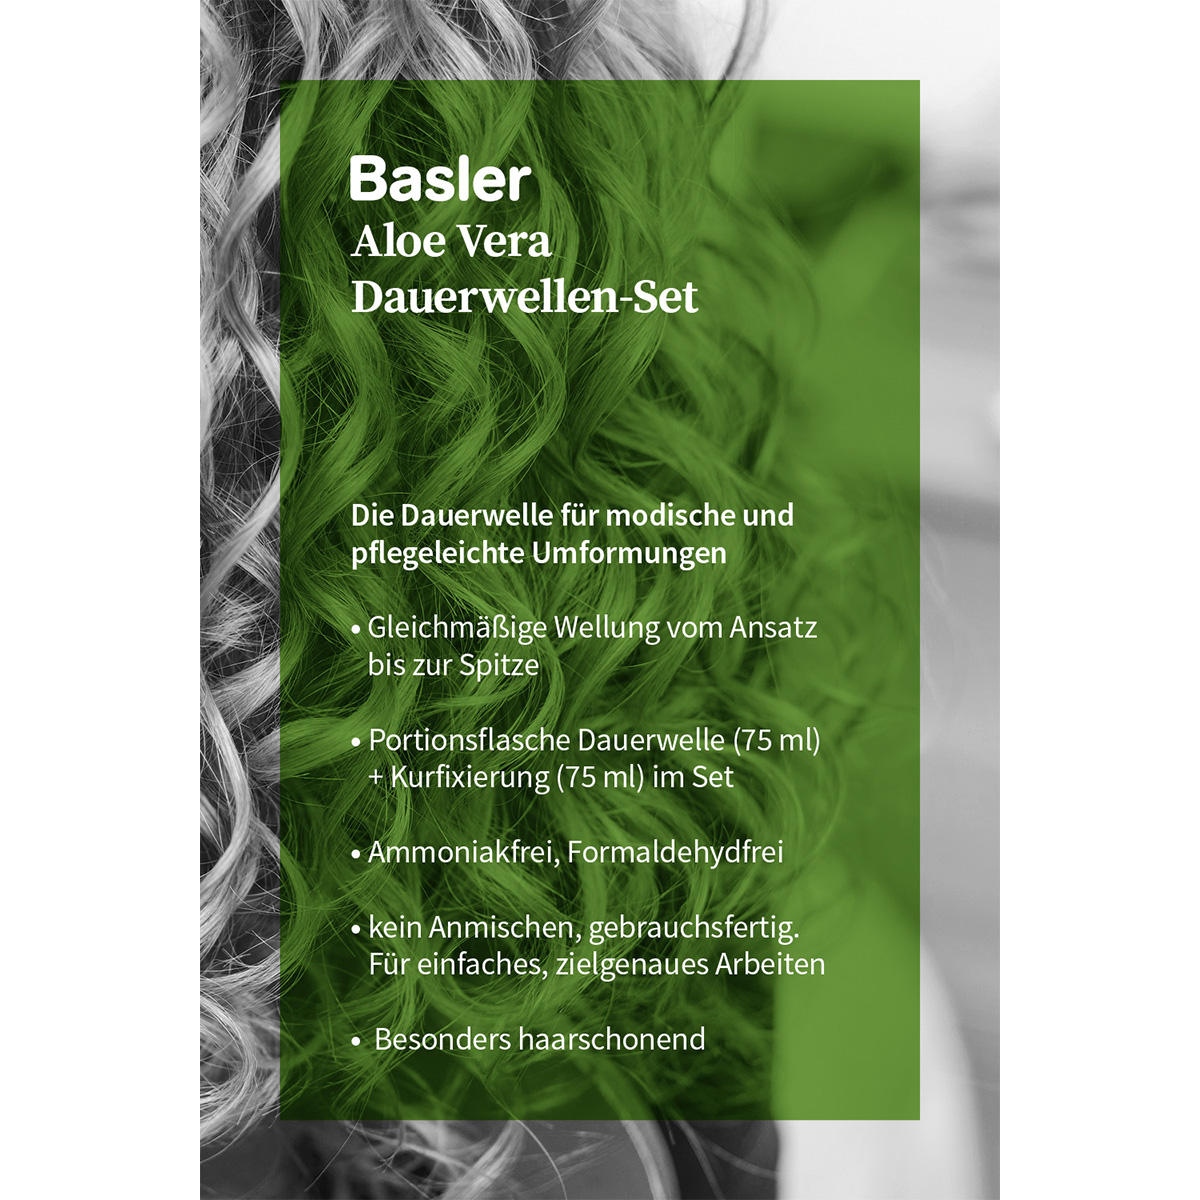 Basler Aloe Vera Perm Set N, for normal hair - 4